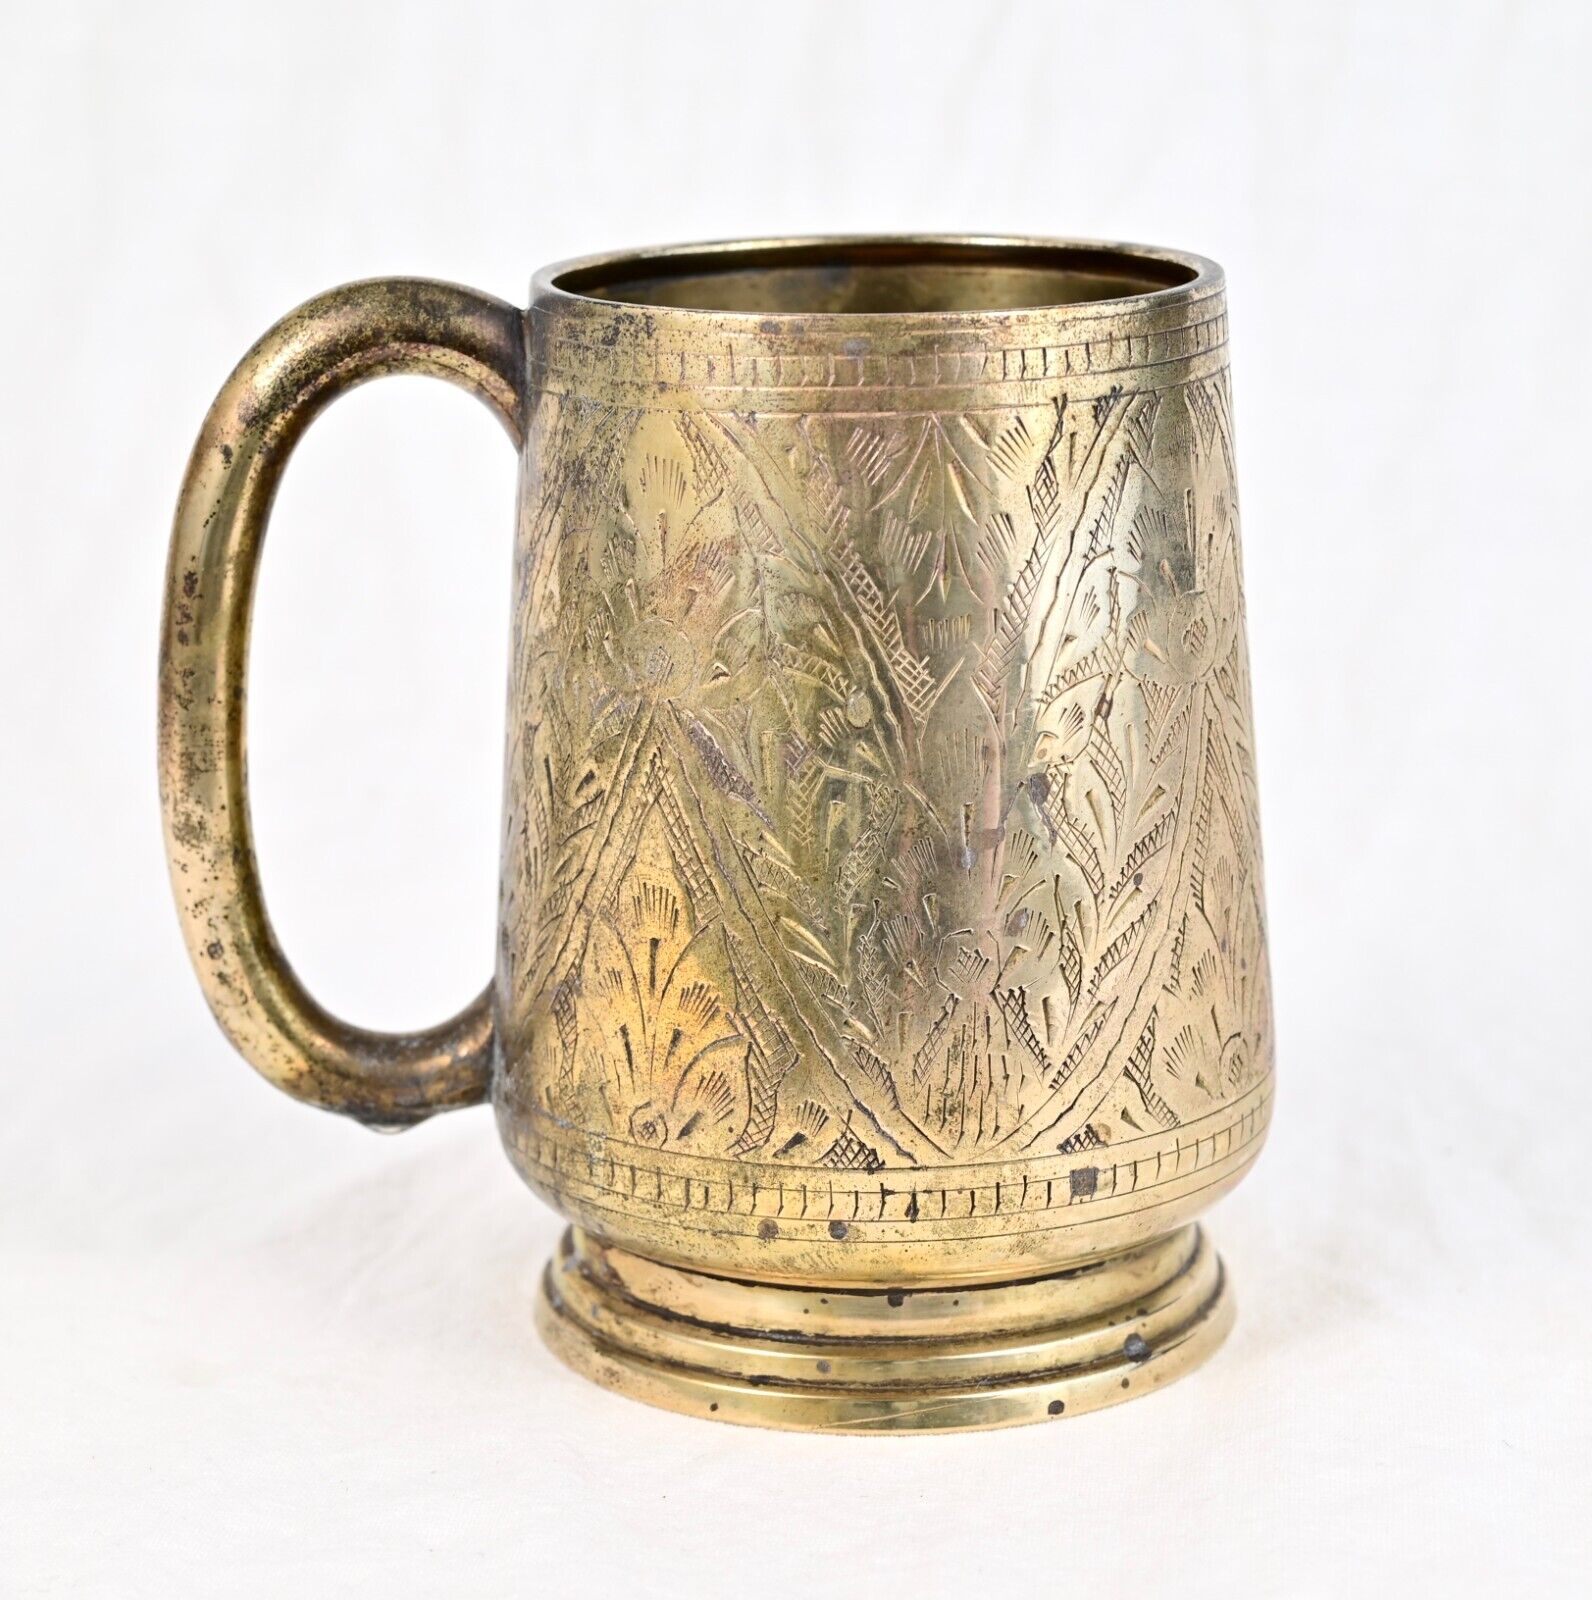 Vintage Brass Mug 40+ Years Old Intricate Engraved Design